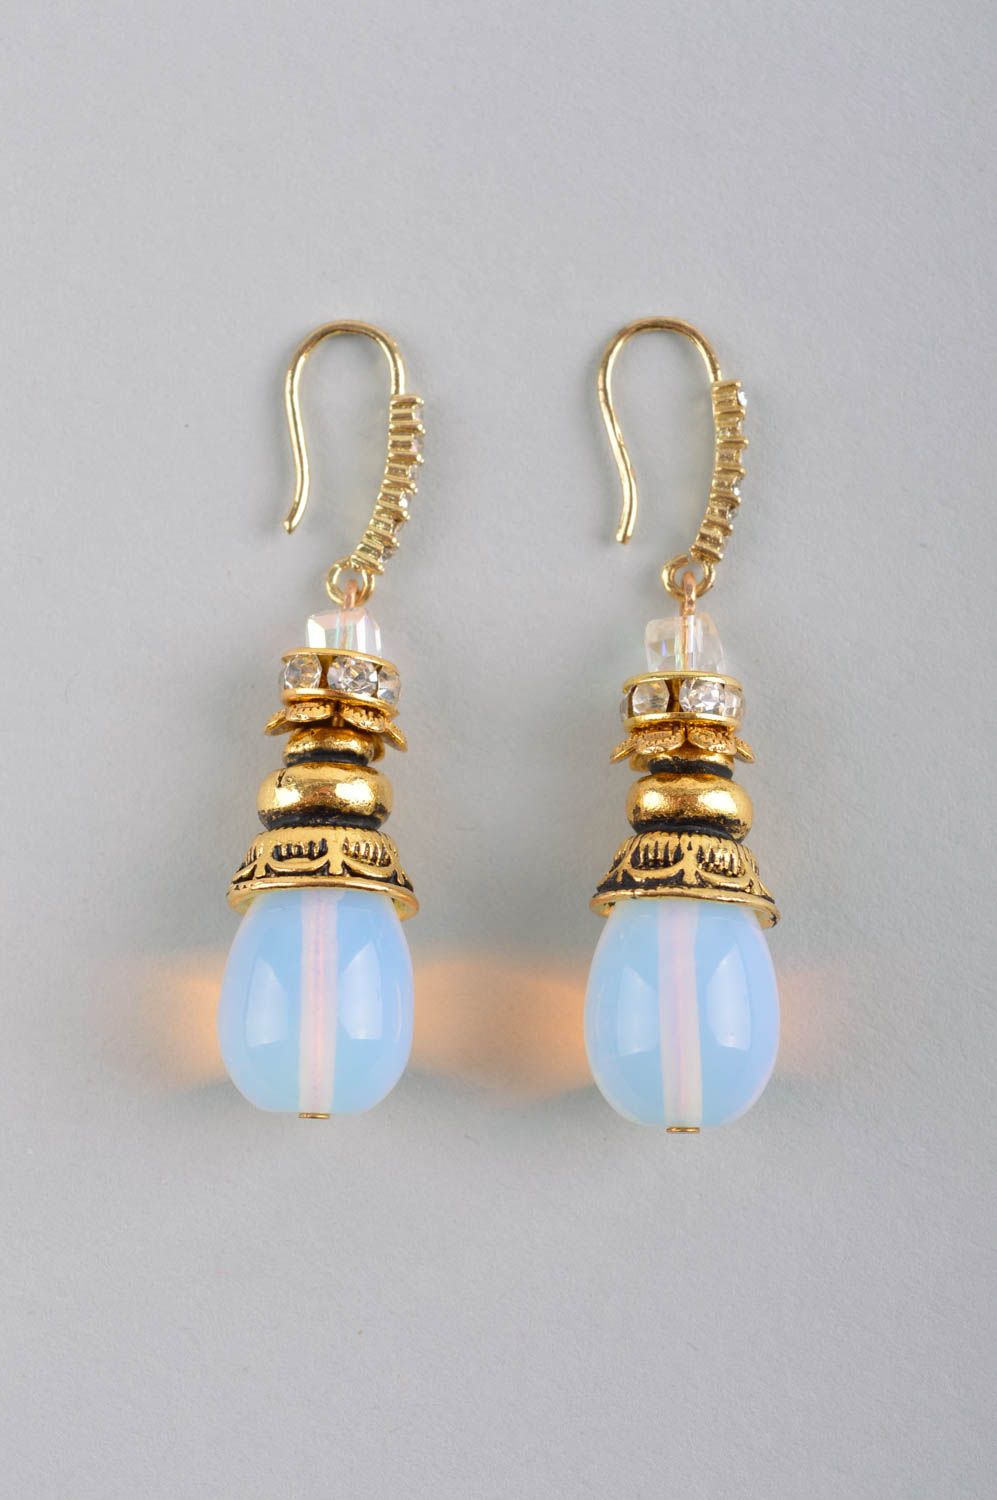 Handmade jewelry gemstone accessories designer accessories earrings for women photo 3